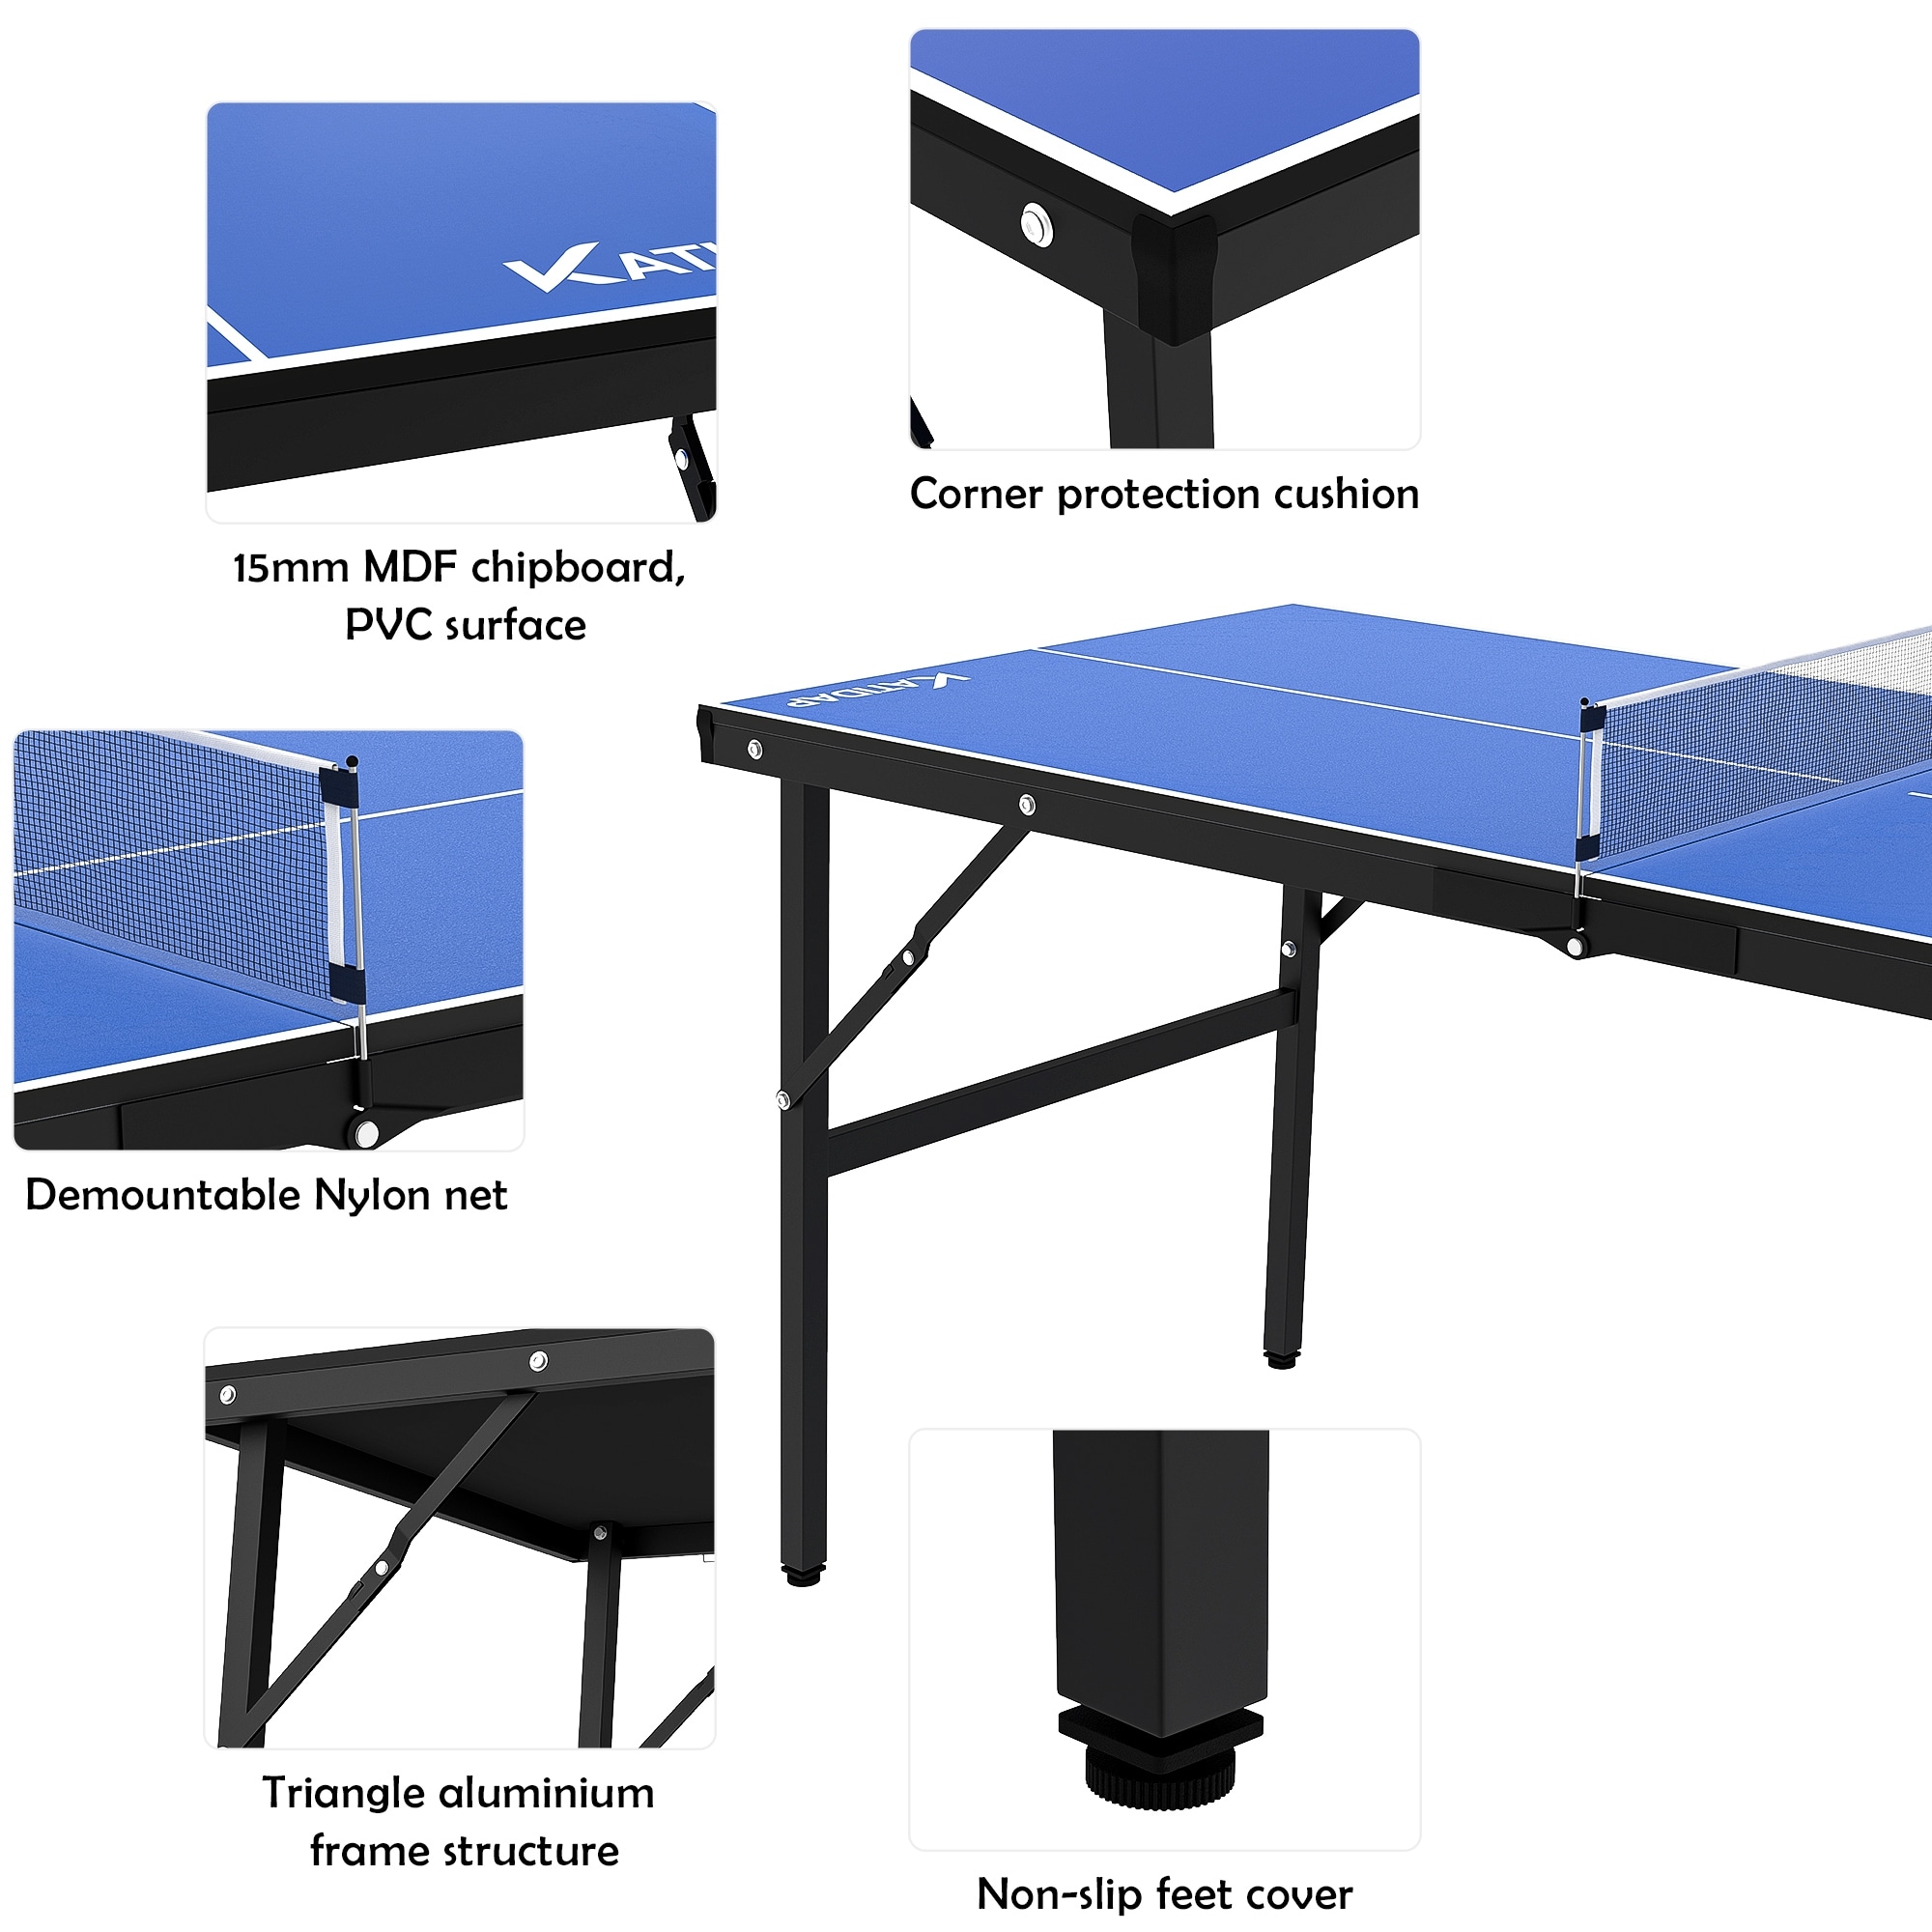 Aluminum Structure Portable Mini Table Tennis Set Fold up Indoor